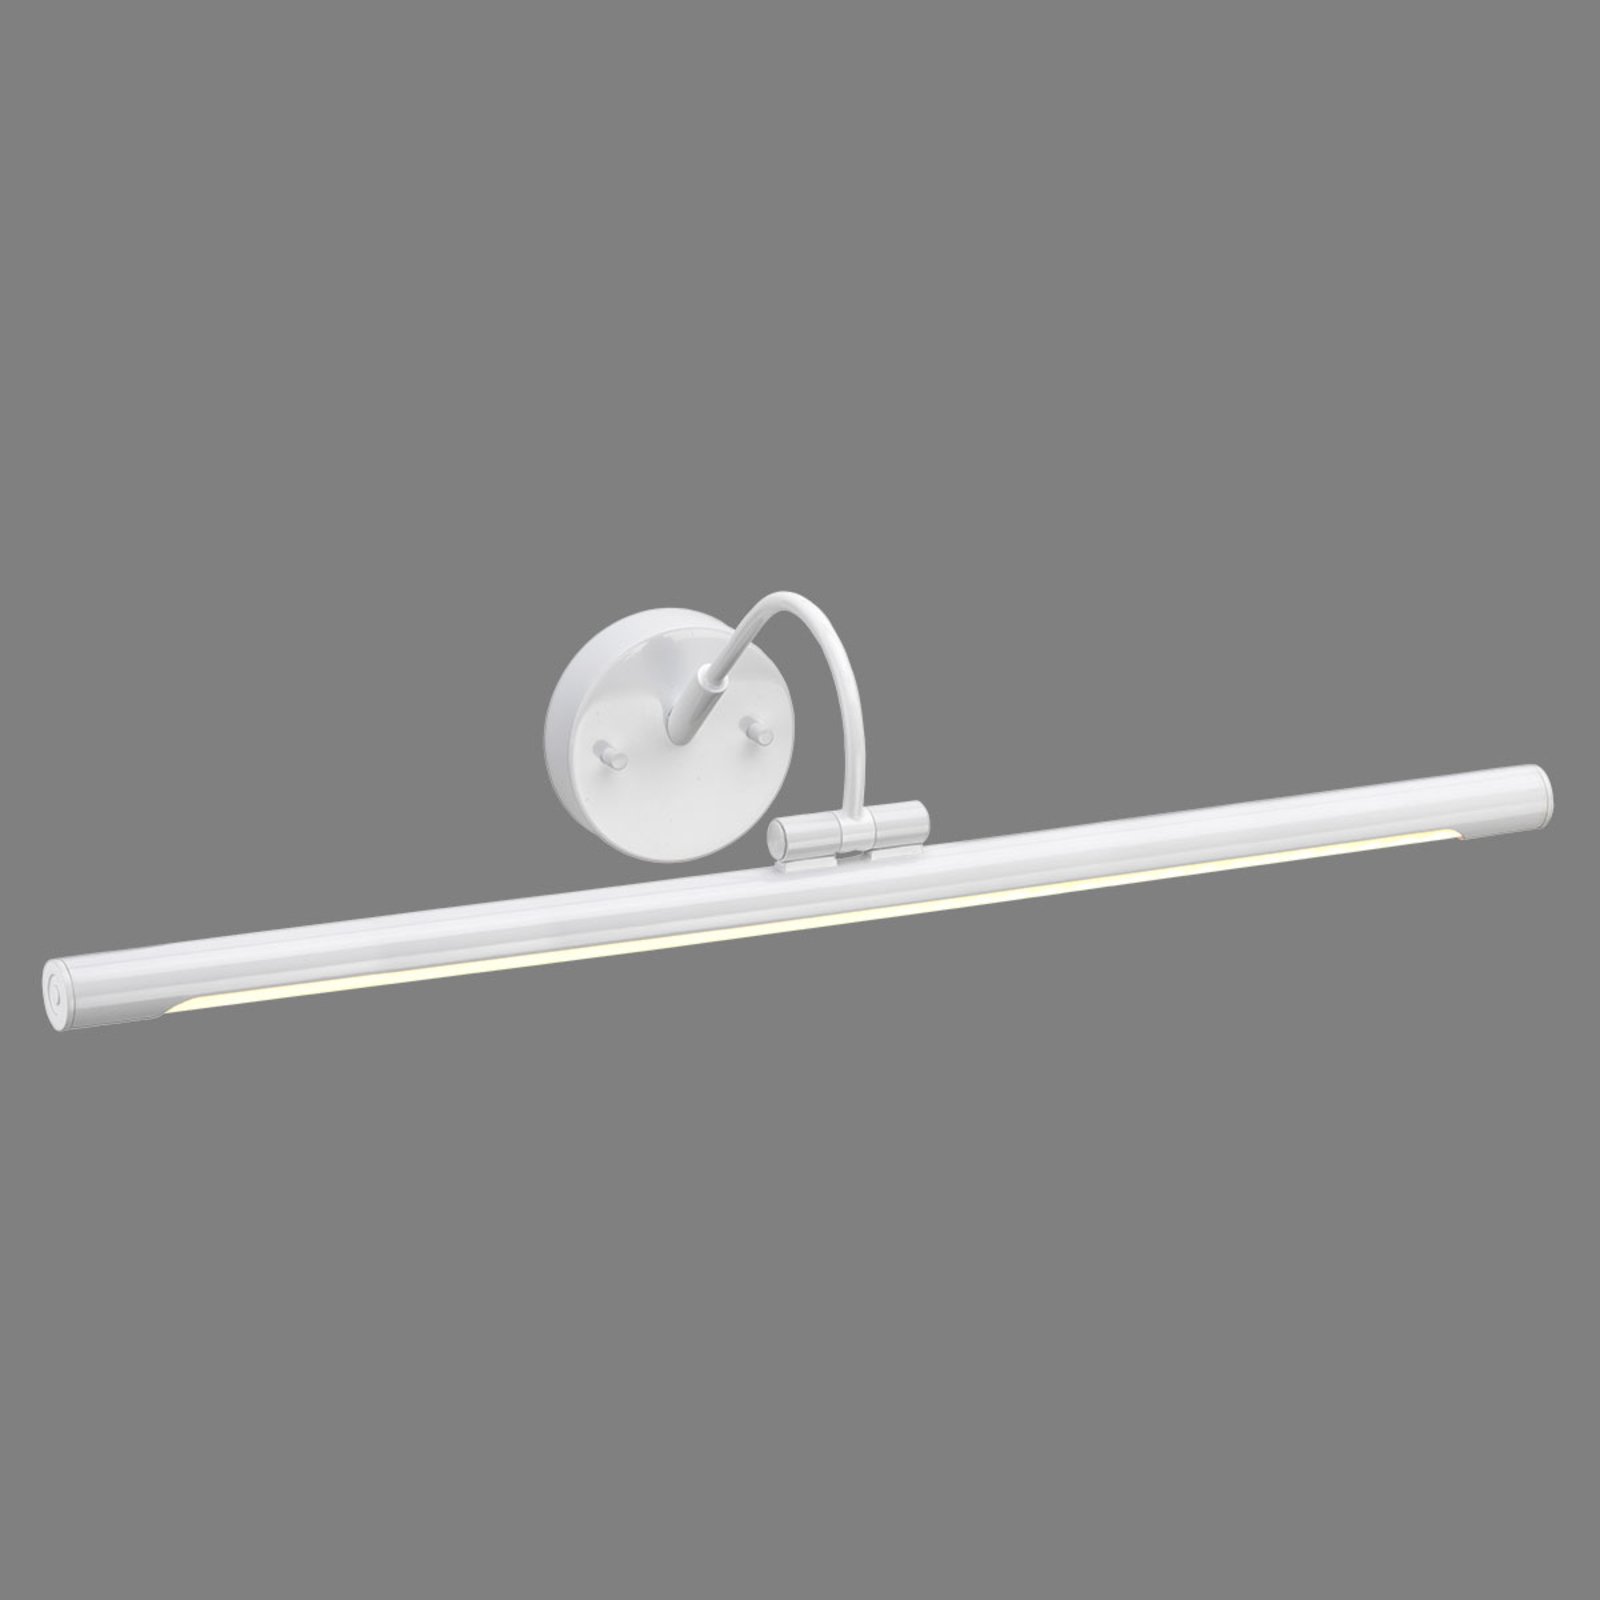 Obrazové LED svetlo Alton v bielom, 67 cm